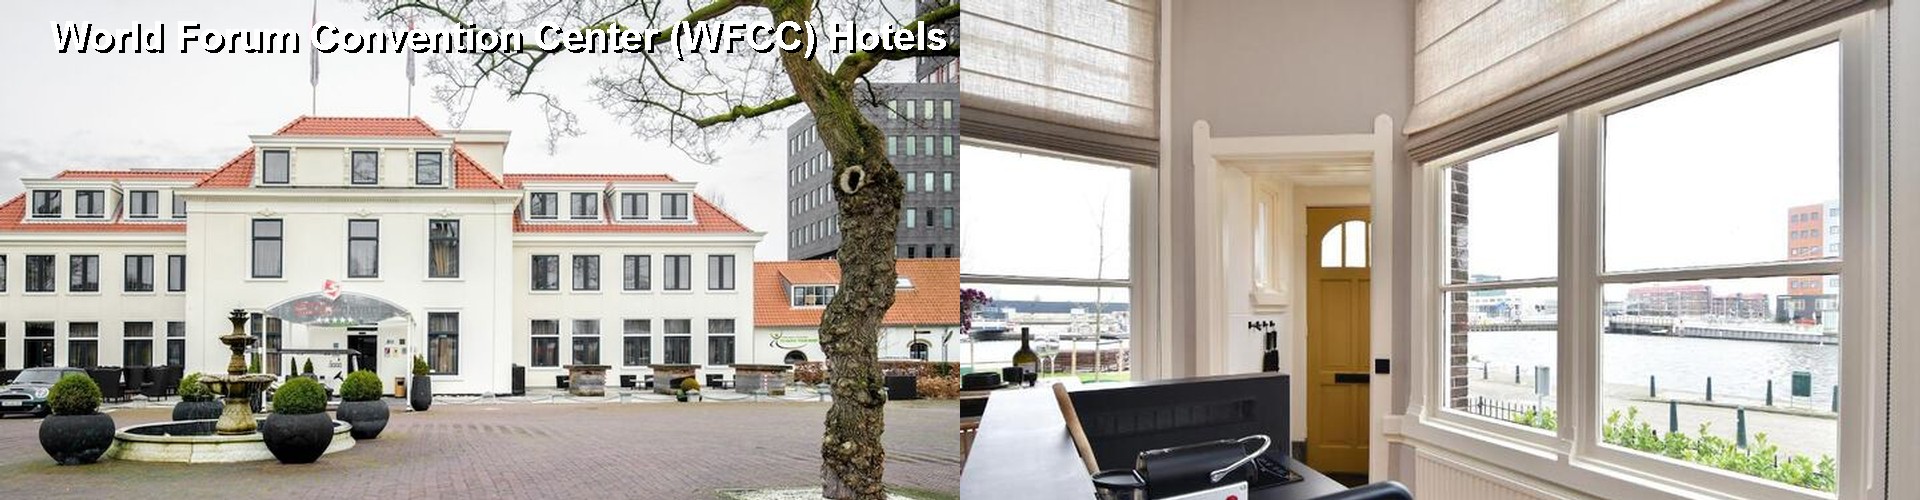 5 Best Hotels near World Forum Convention Center (WFCC)